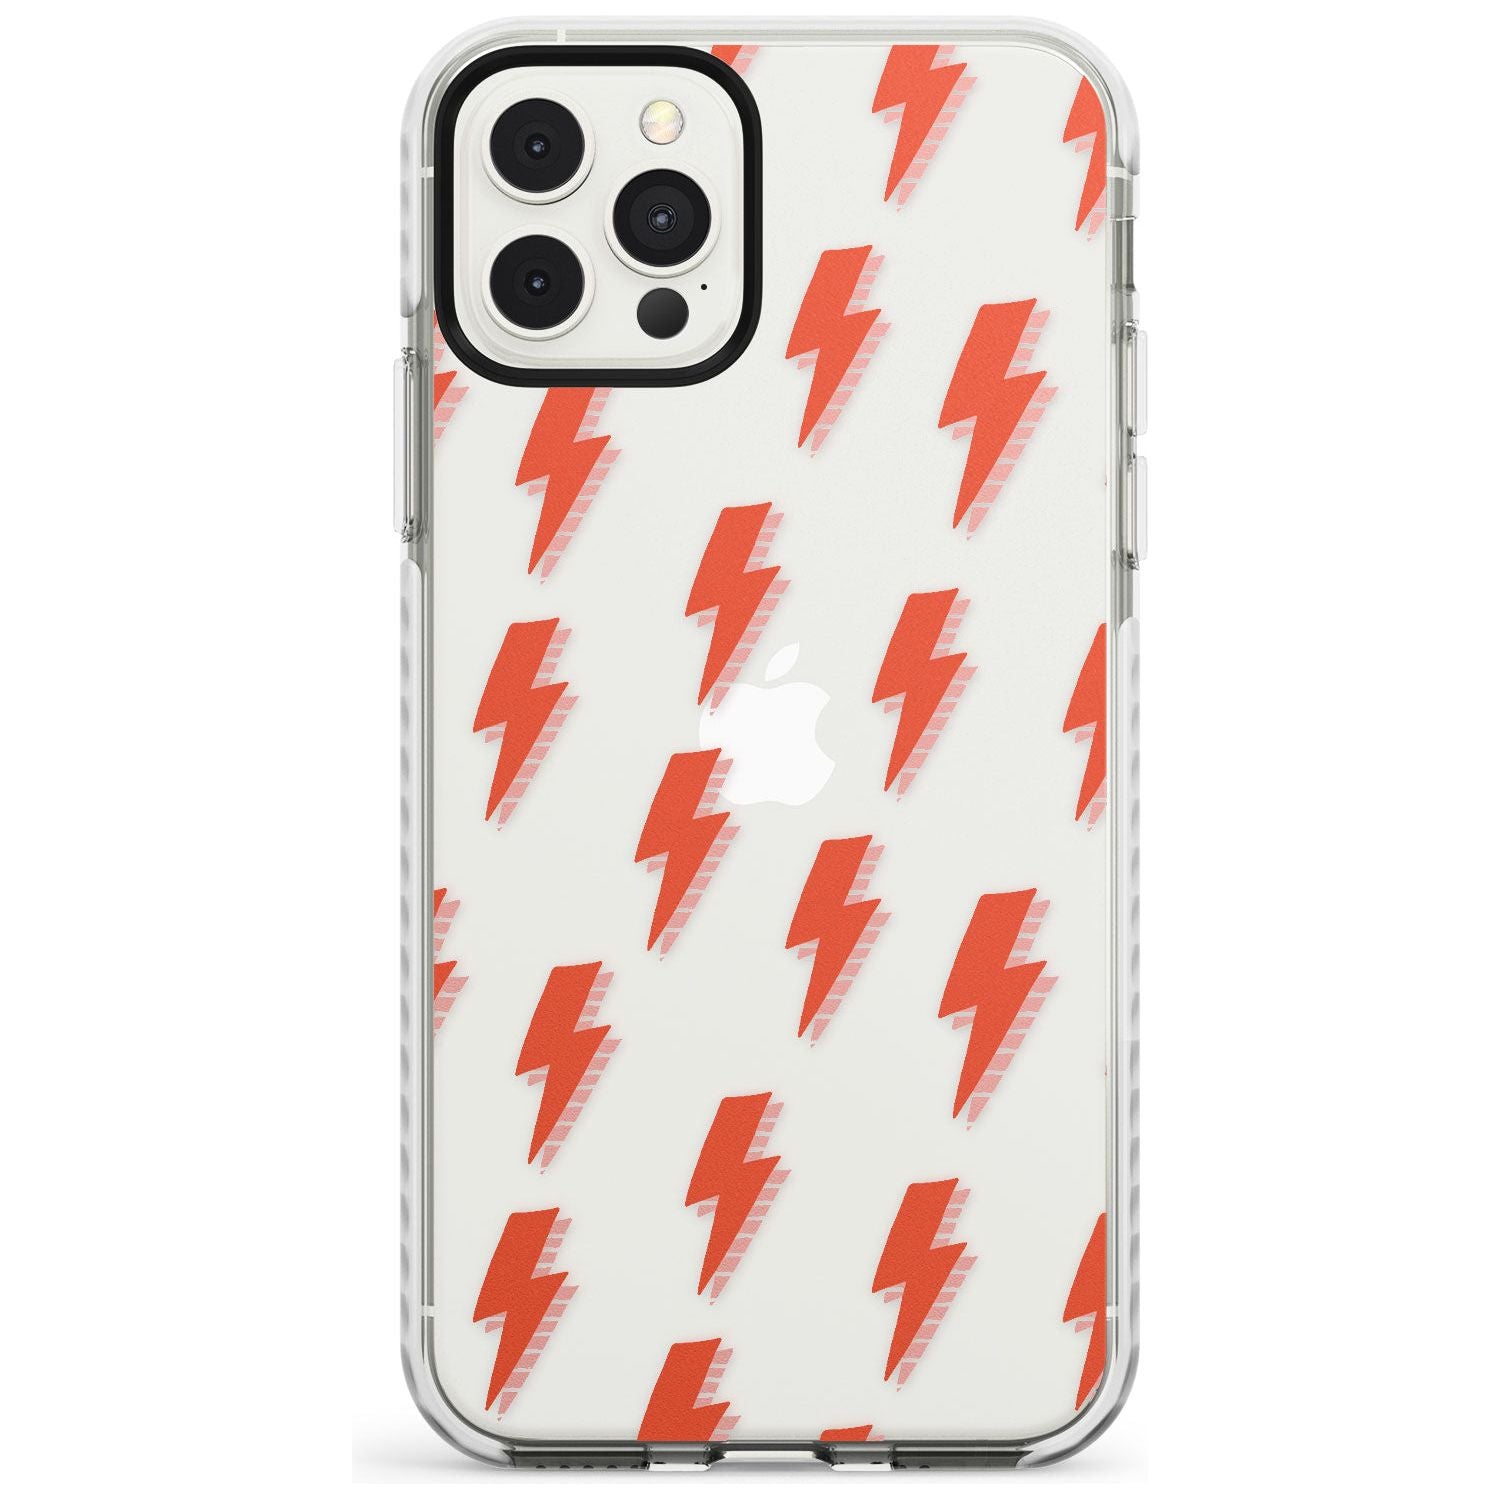 Pop Lightning Slim TPU Phone Case for iPhone 11 Pro Max